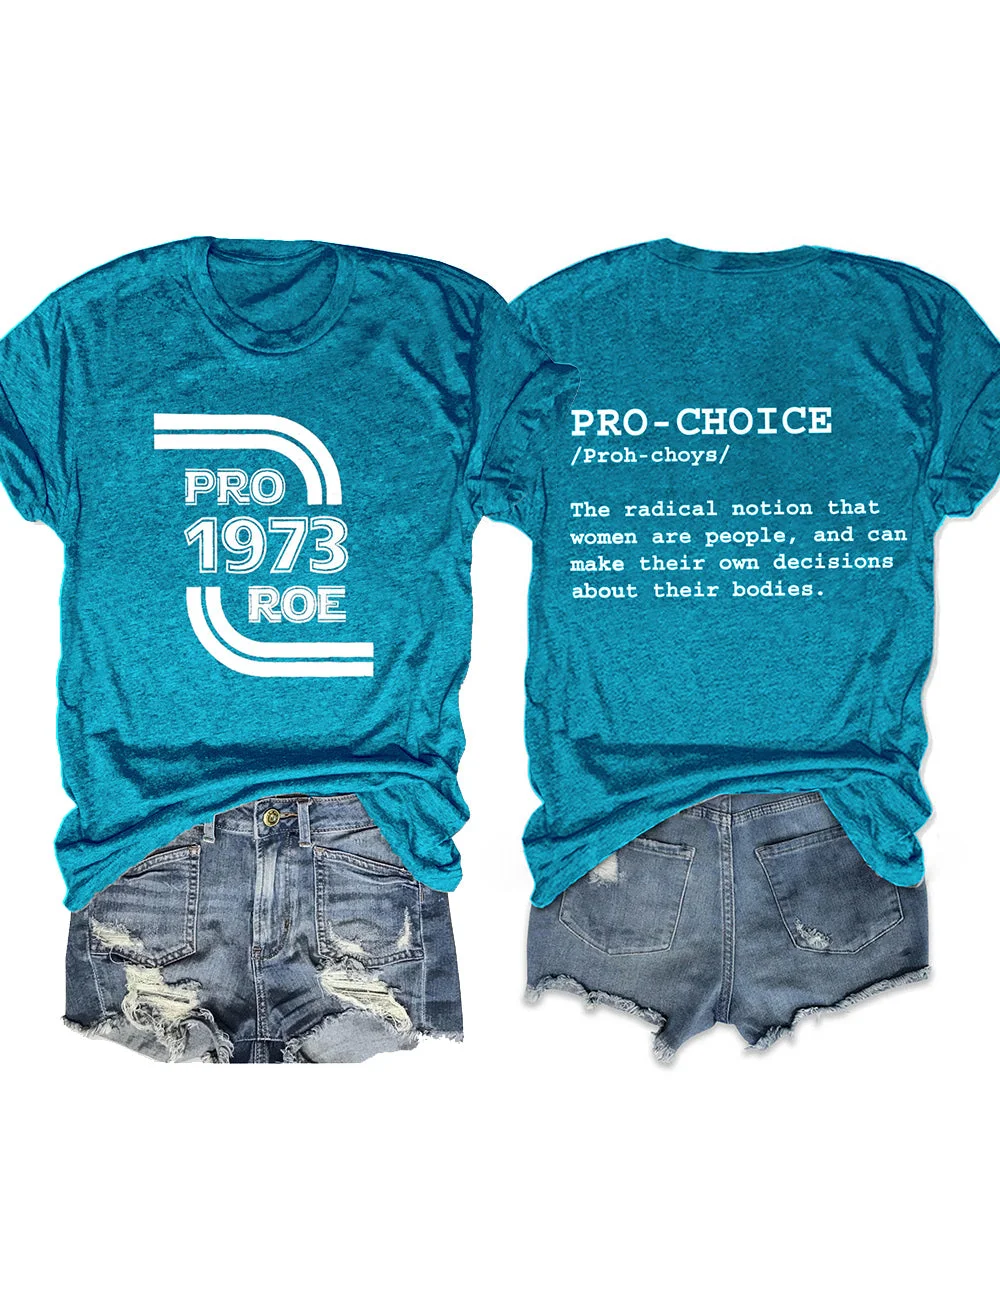 Pro Roe Pro-Choice Blue Tee